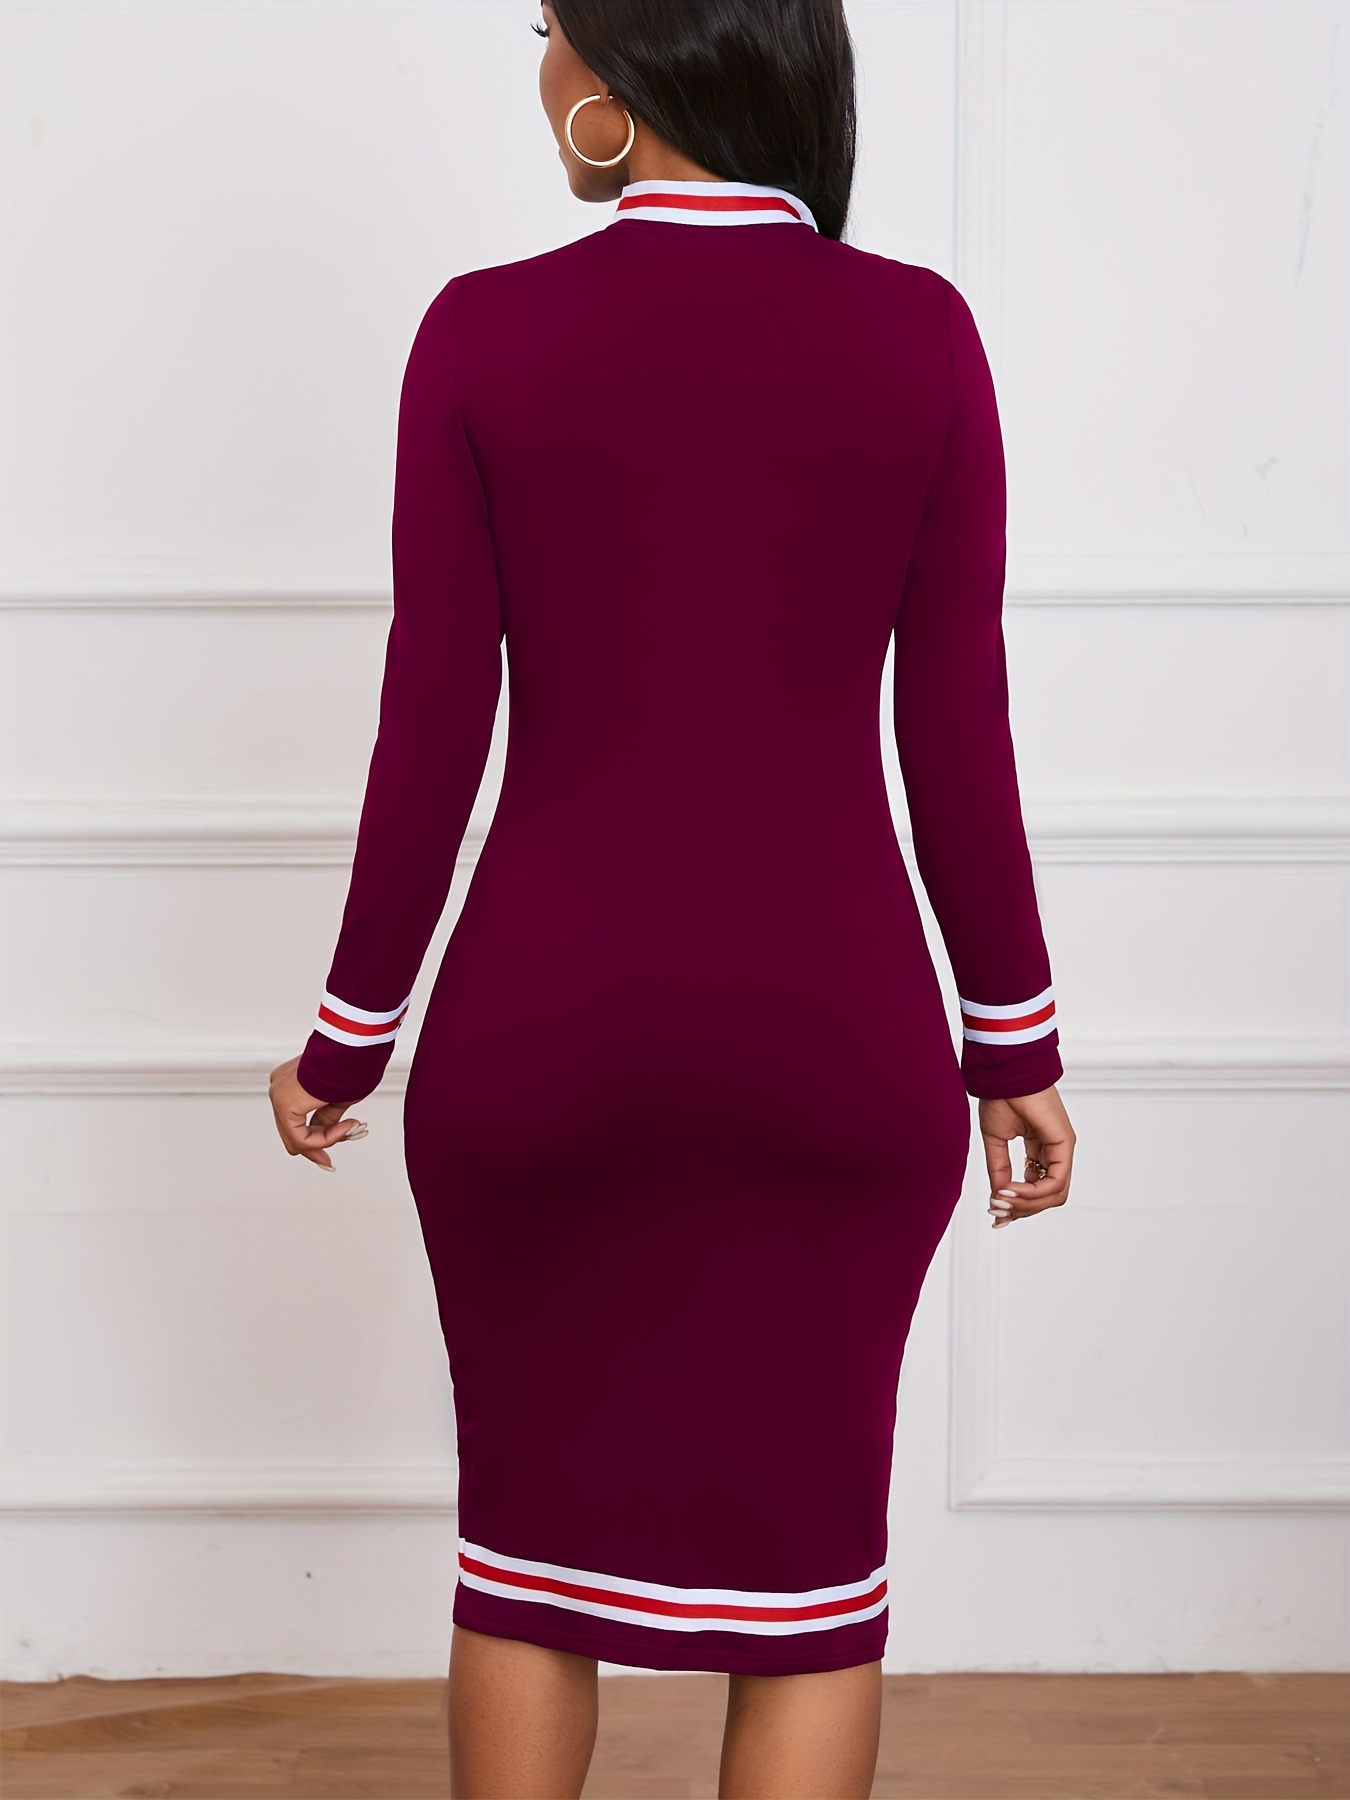 zip up striped print dress, casual long sleeve bodycon midi dress, women's clothing burgundy 1